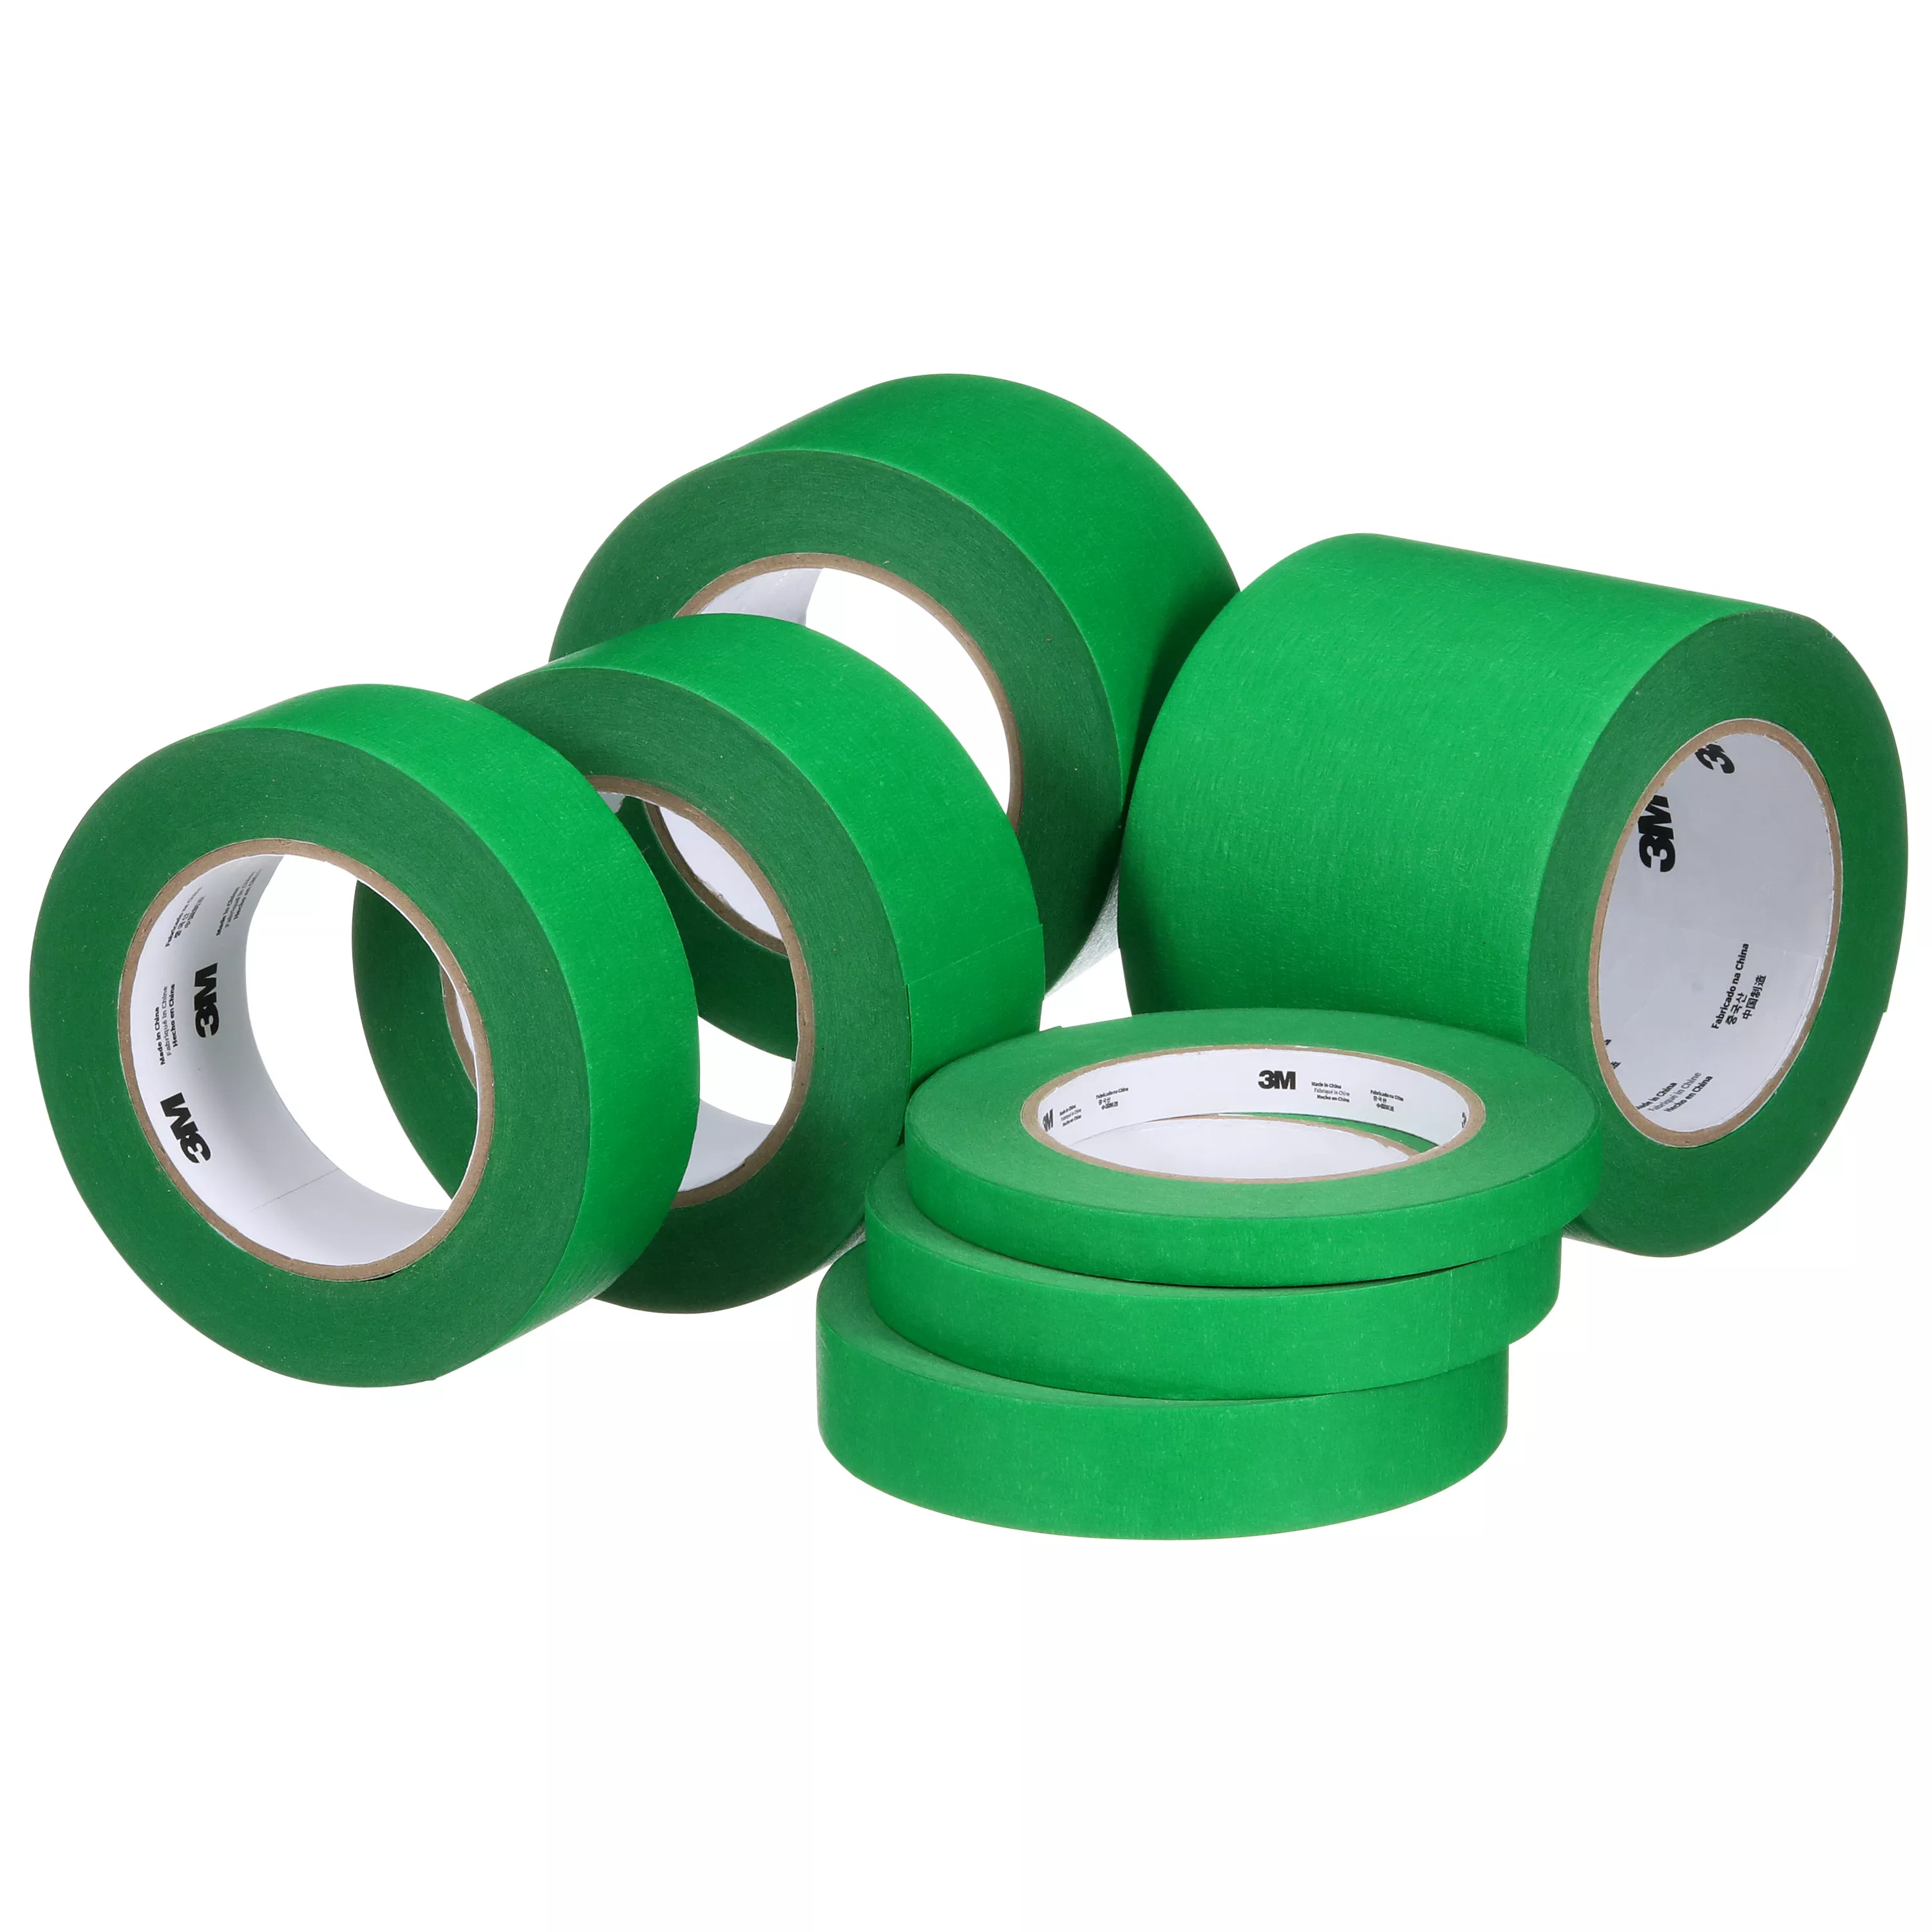 SKU 7100299468 | 3M™ UV Resistant Green Masking Tape